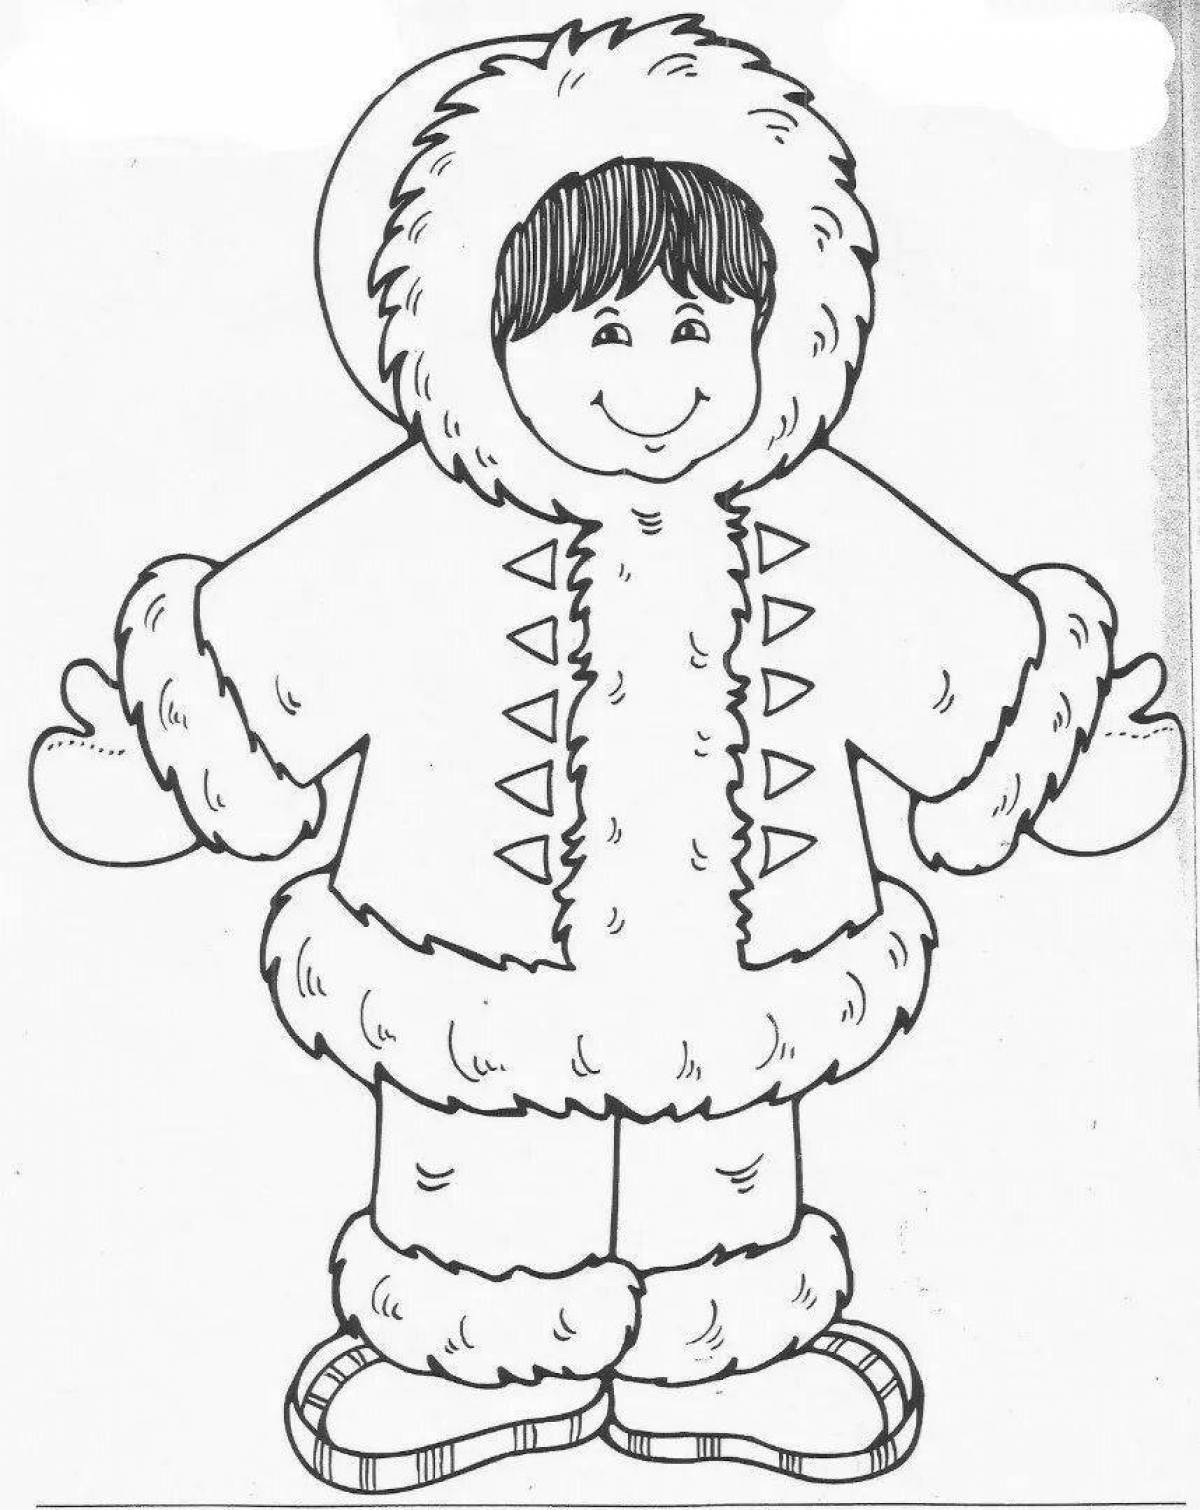 Bright Eskimo children's coloring pages